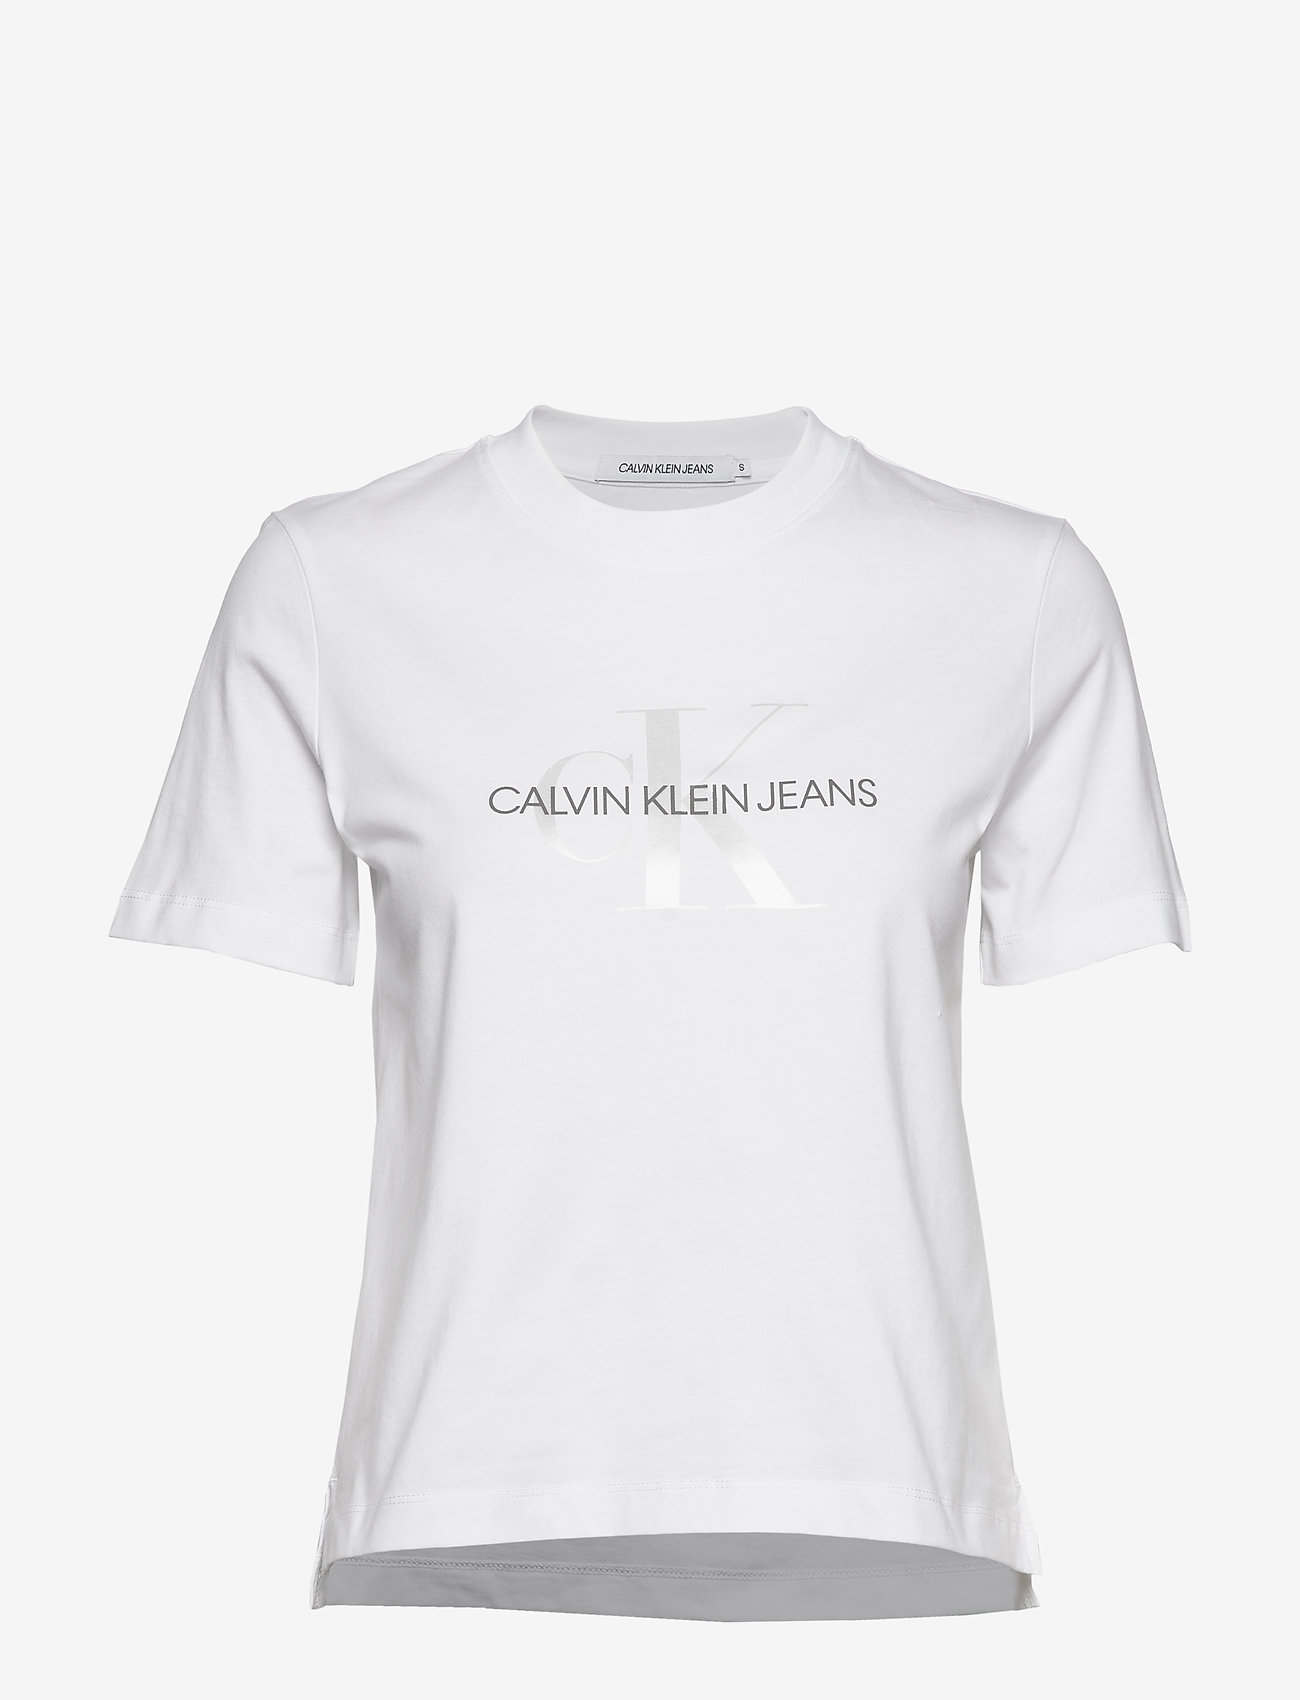 calvin klein jeans white t shirt